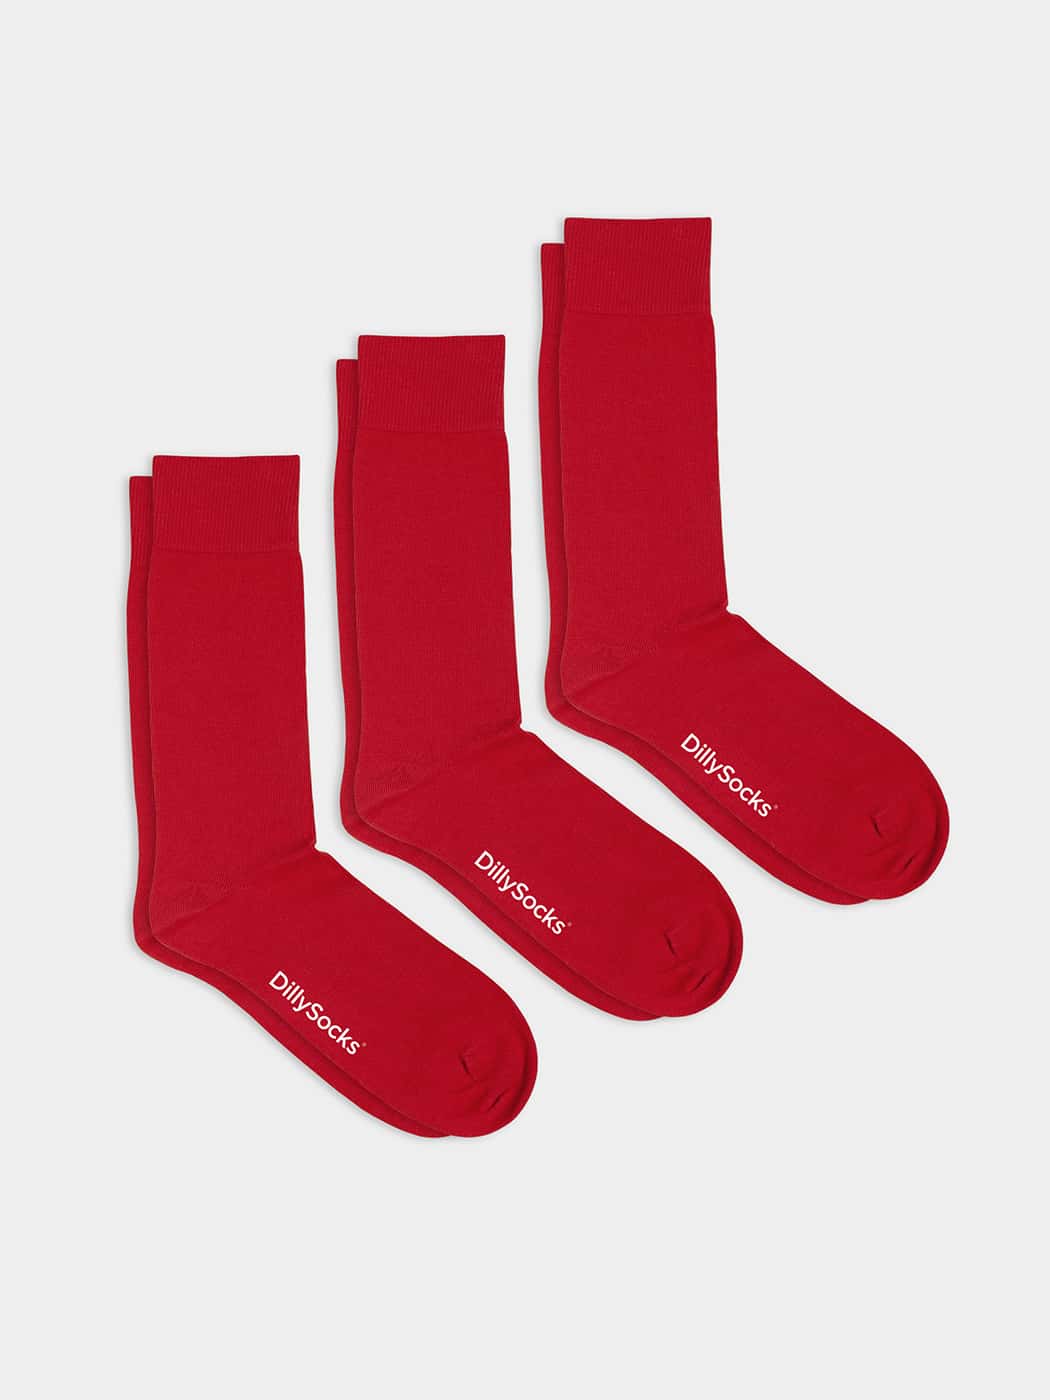 - Socken-Sets in Rot mit Uni Motiv/Muster von DillySocks